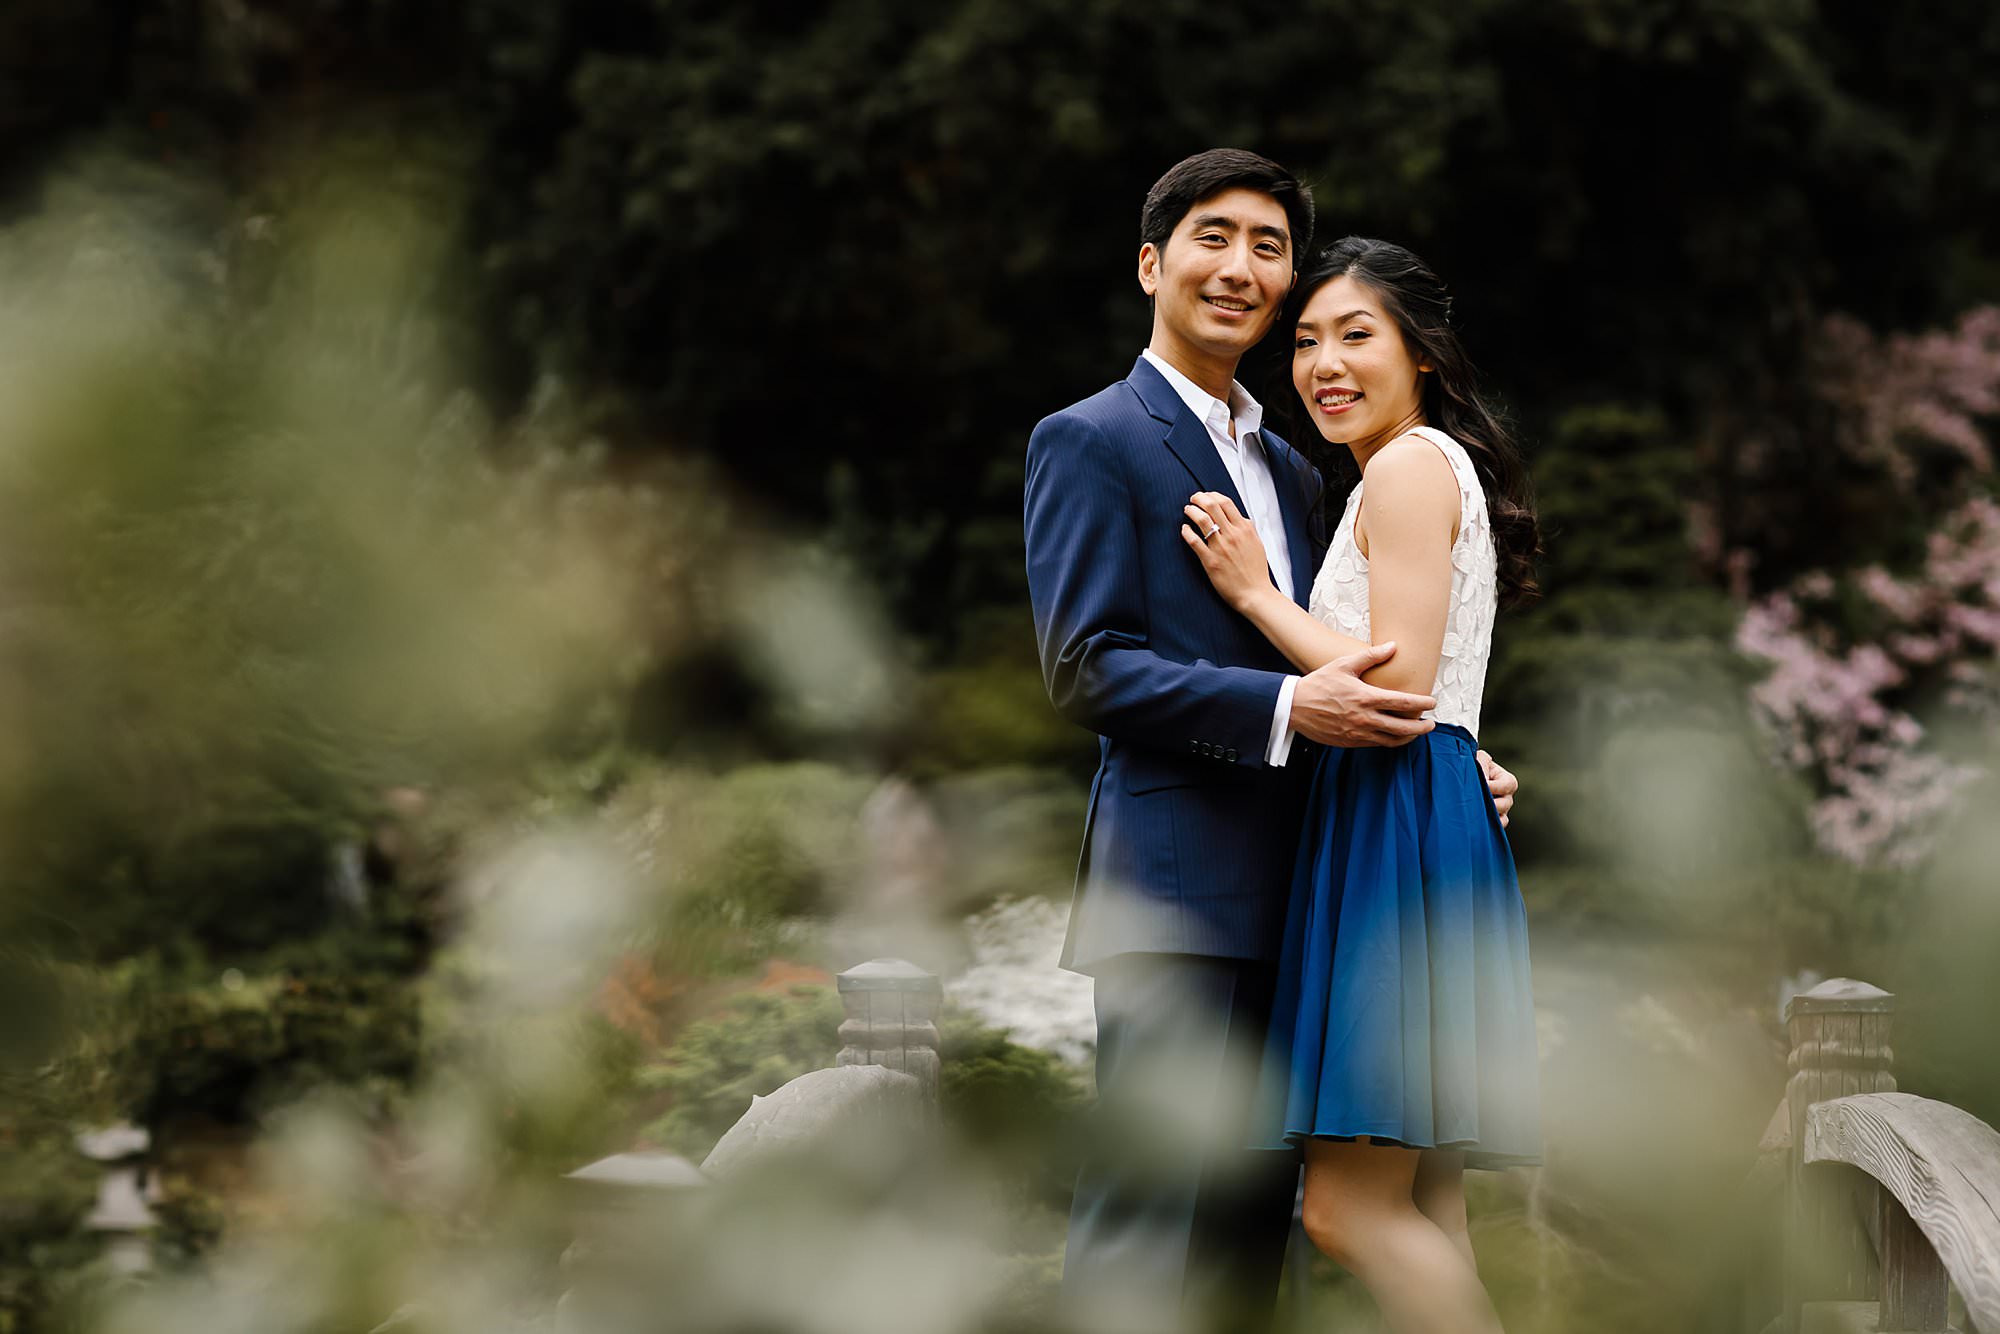 Engaged couple embracing on the bridge in Hakone Estate gardens